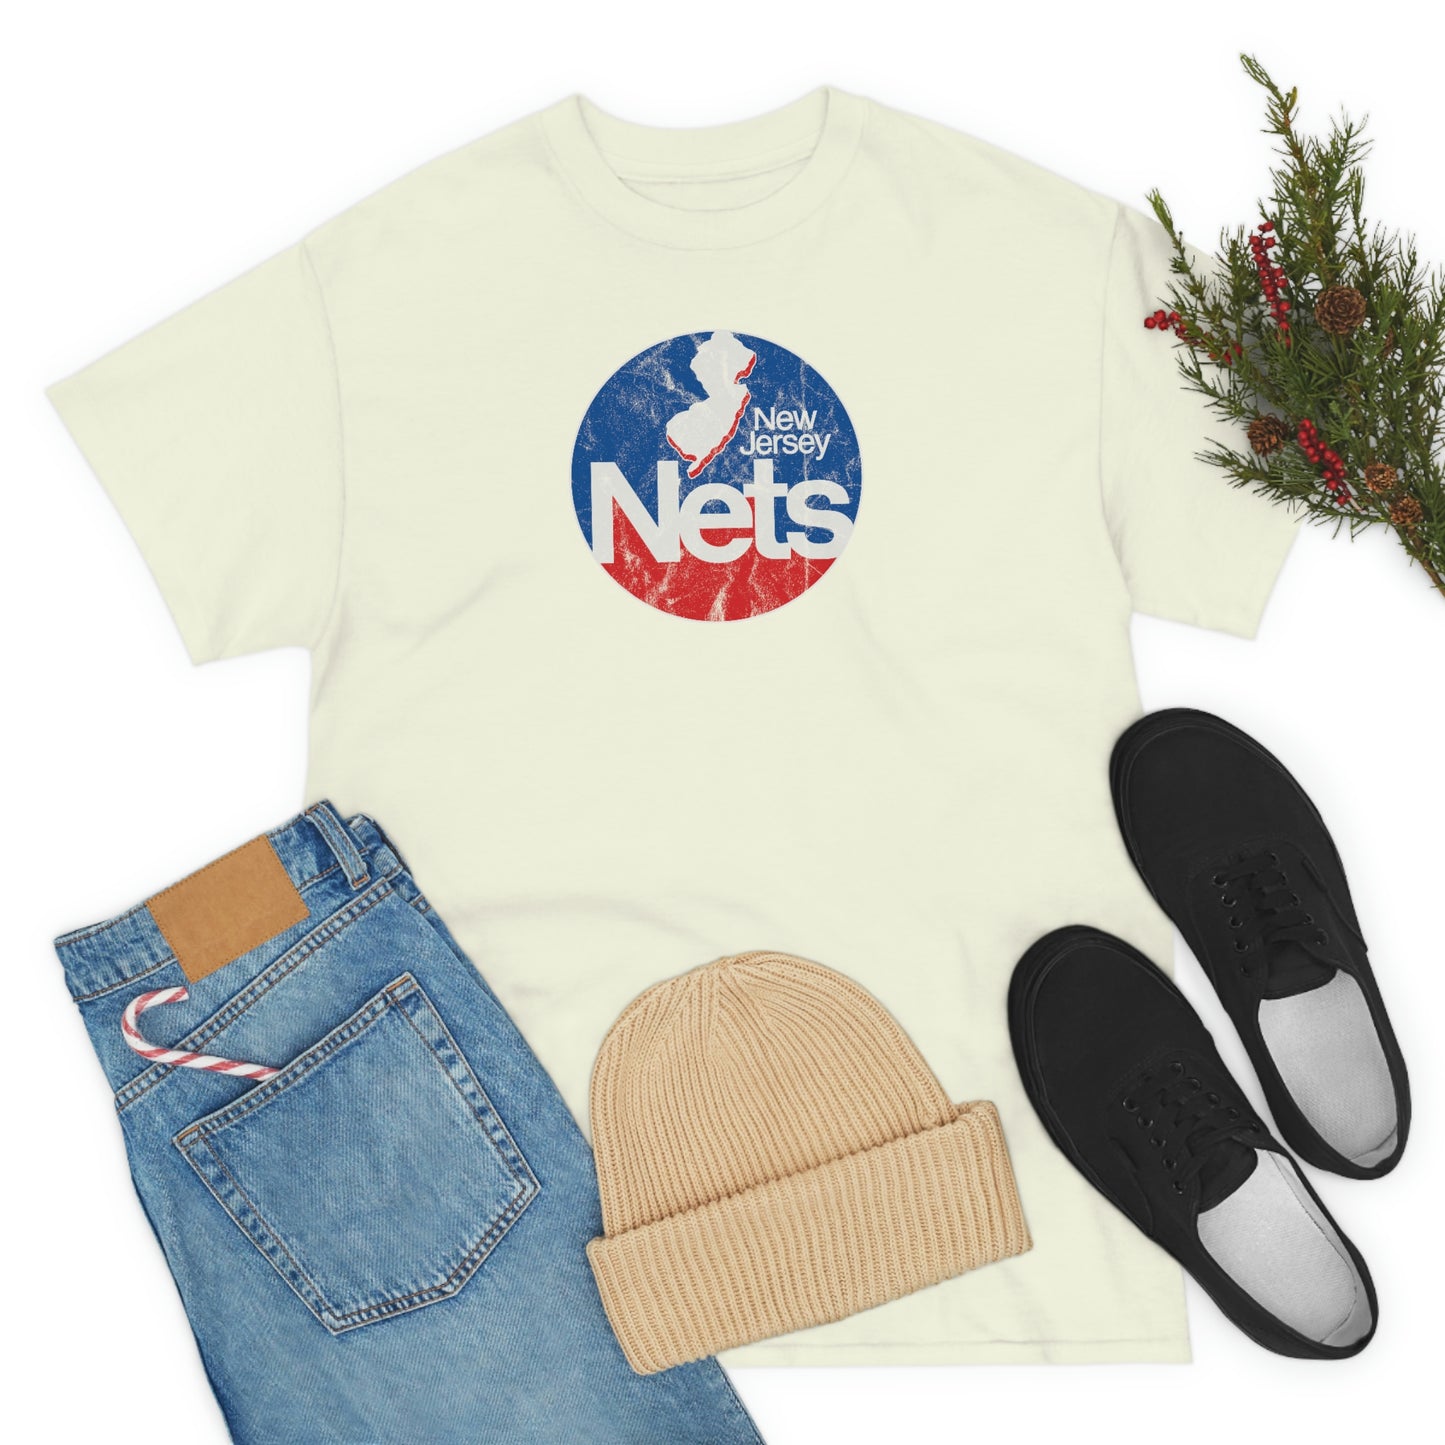 New Jersey Nets Distressed T-Shirt